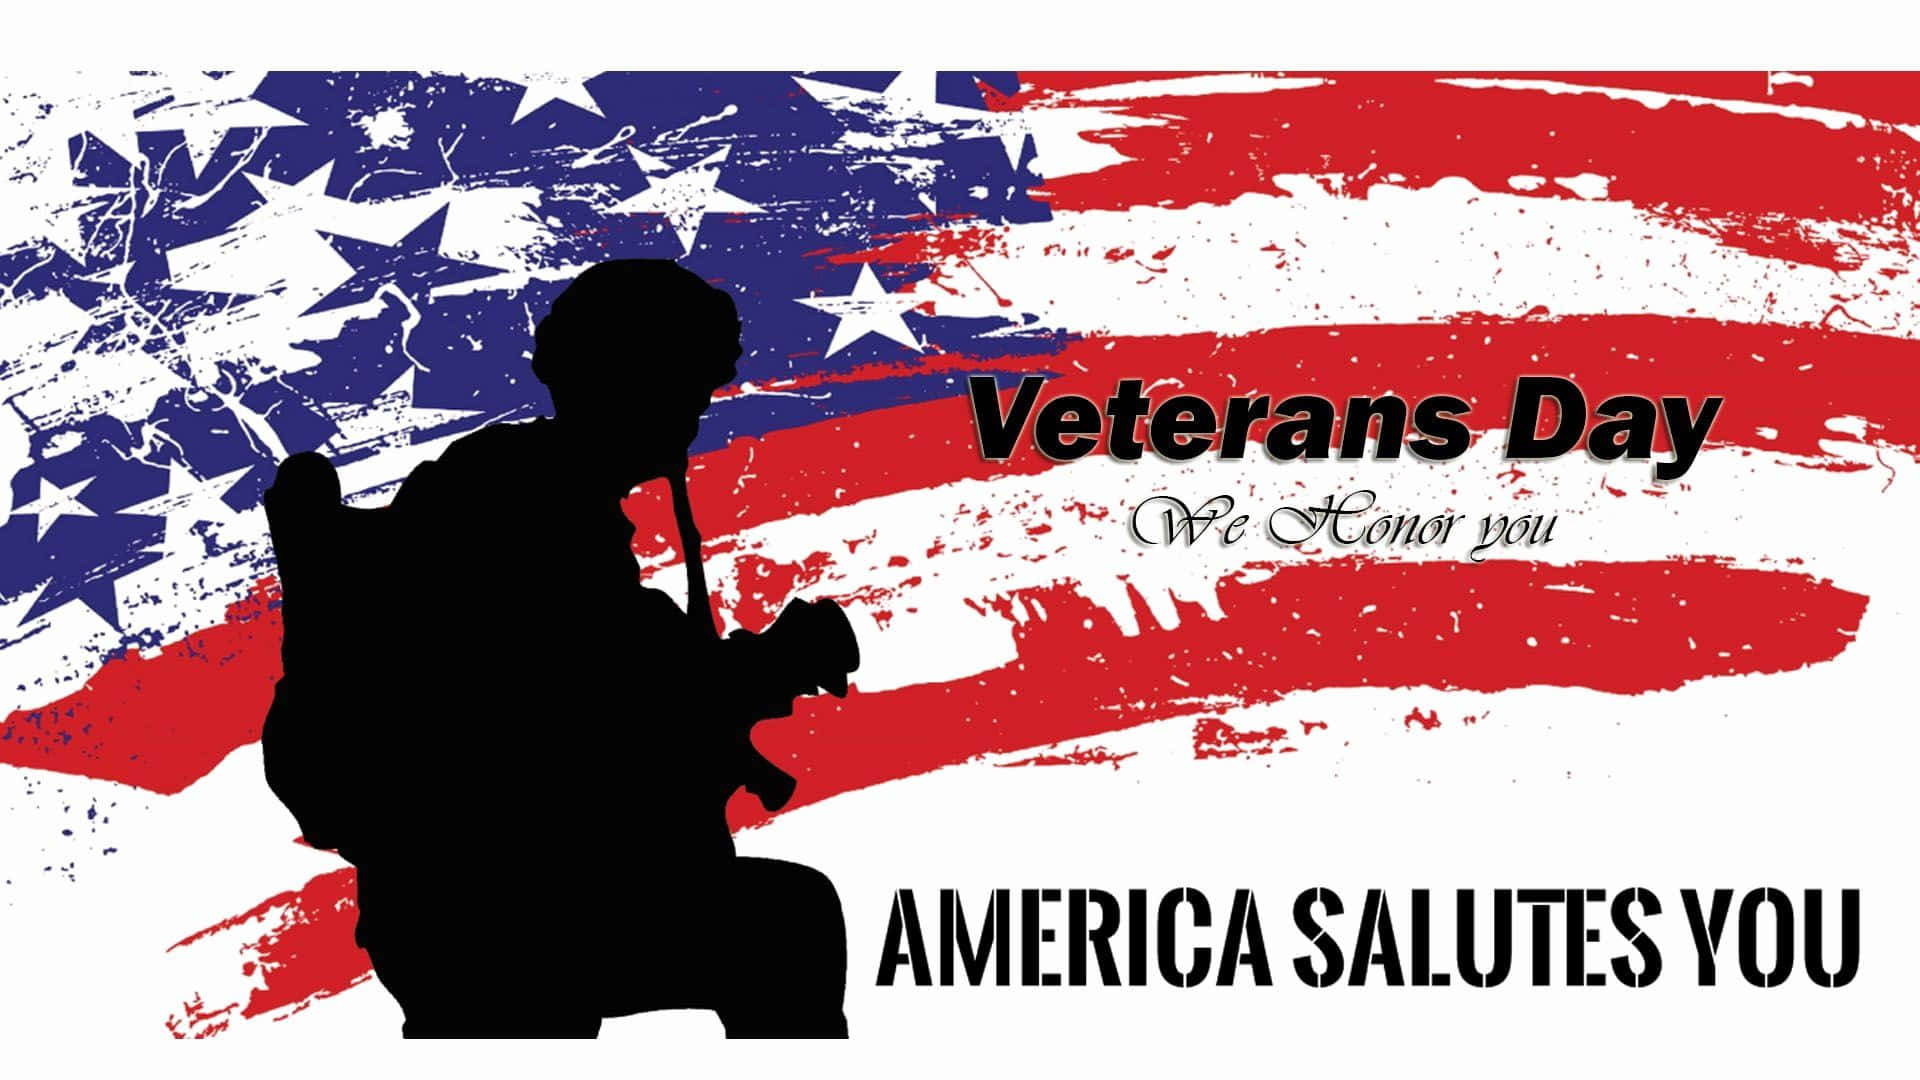 Honor And Valor - Celebrating Veterans Day